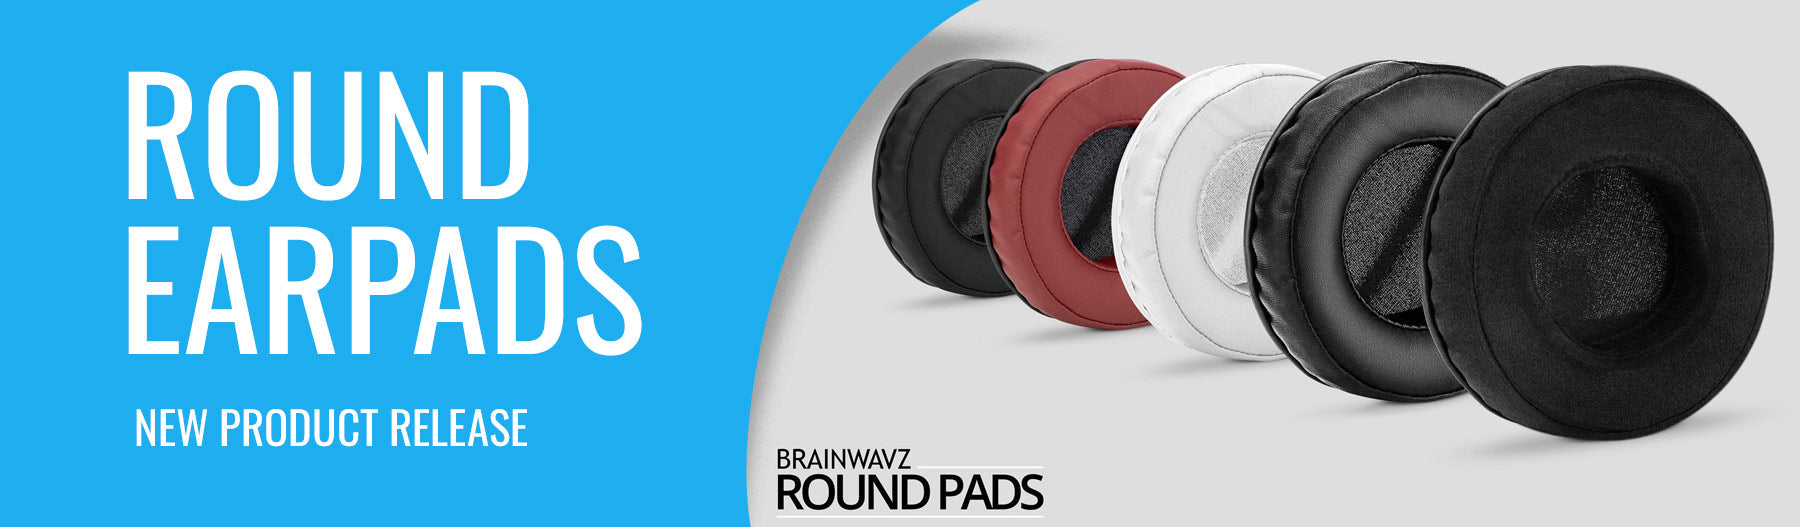 New round headphone earpads from Brainwavz